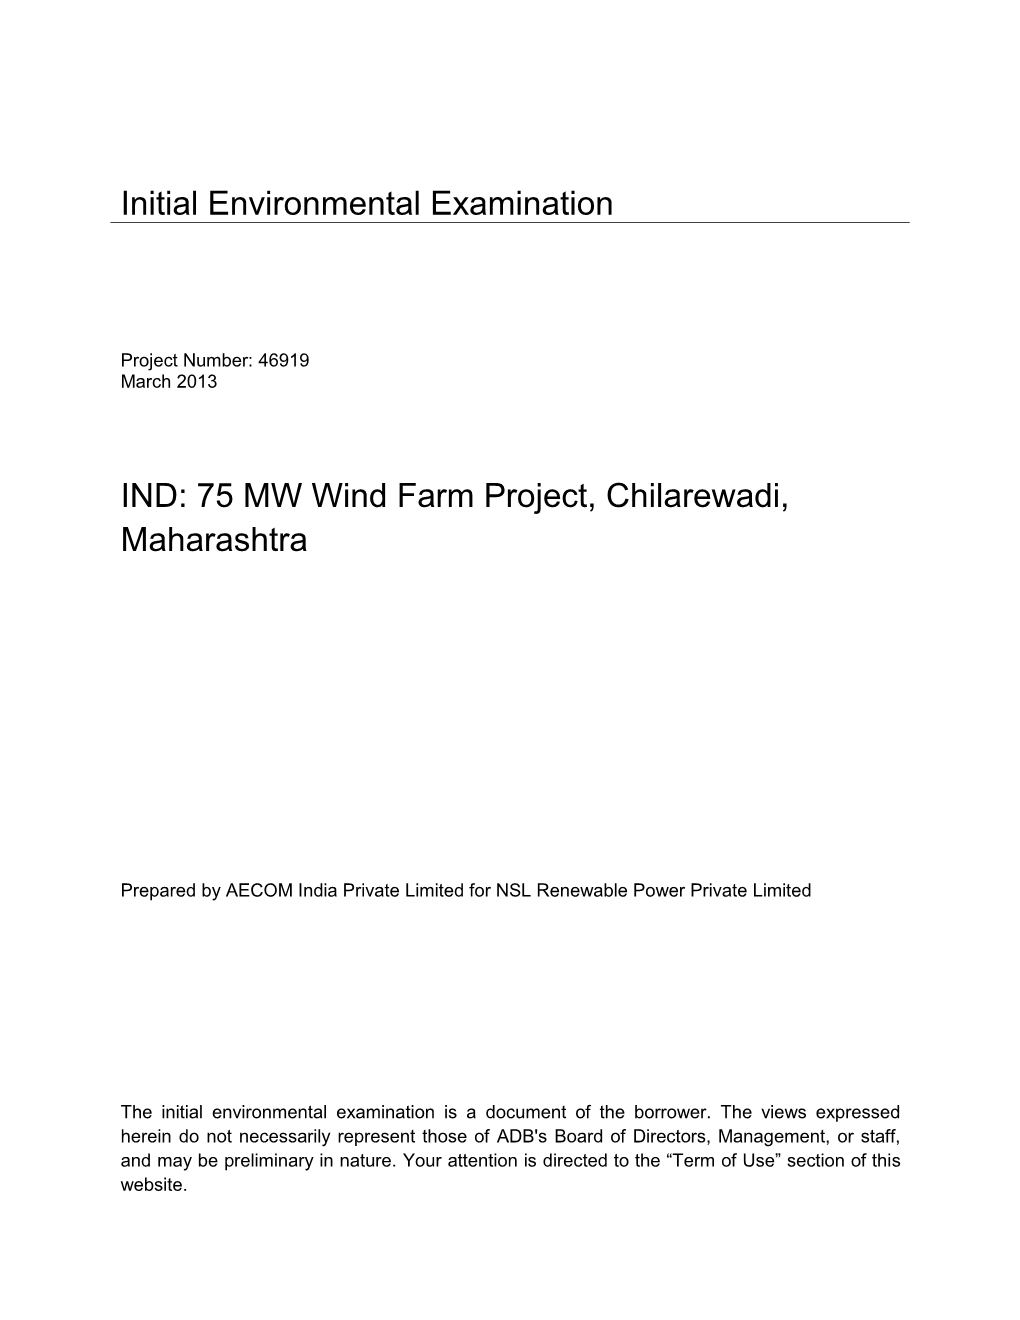 IND: 75 MW Wind Farm Project, Chilarewadi, Maharashtra